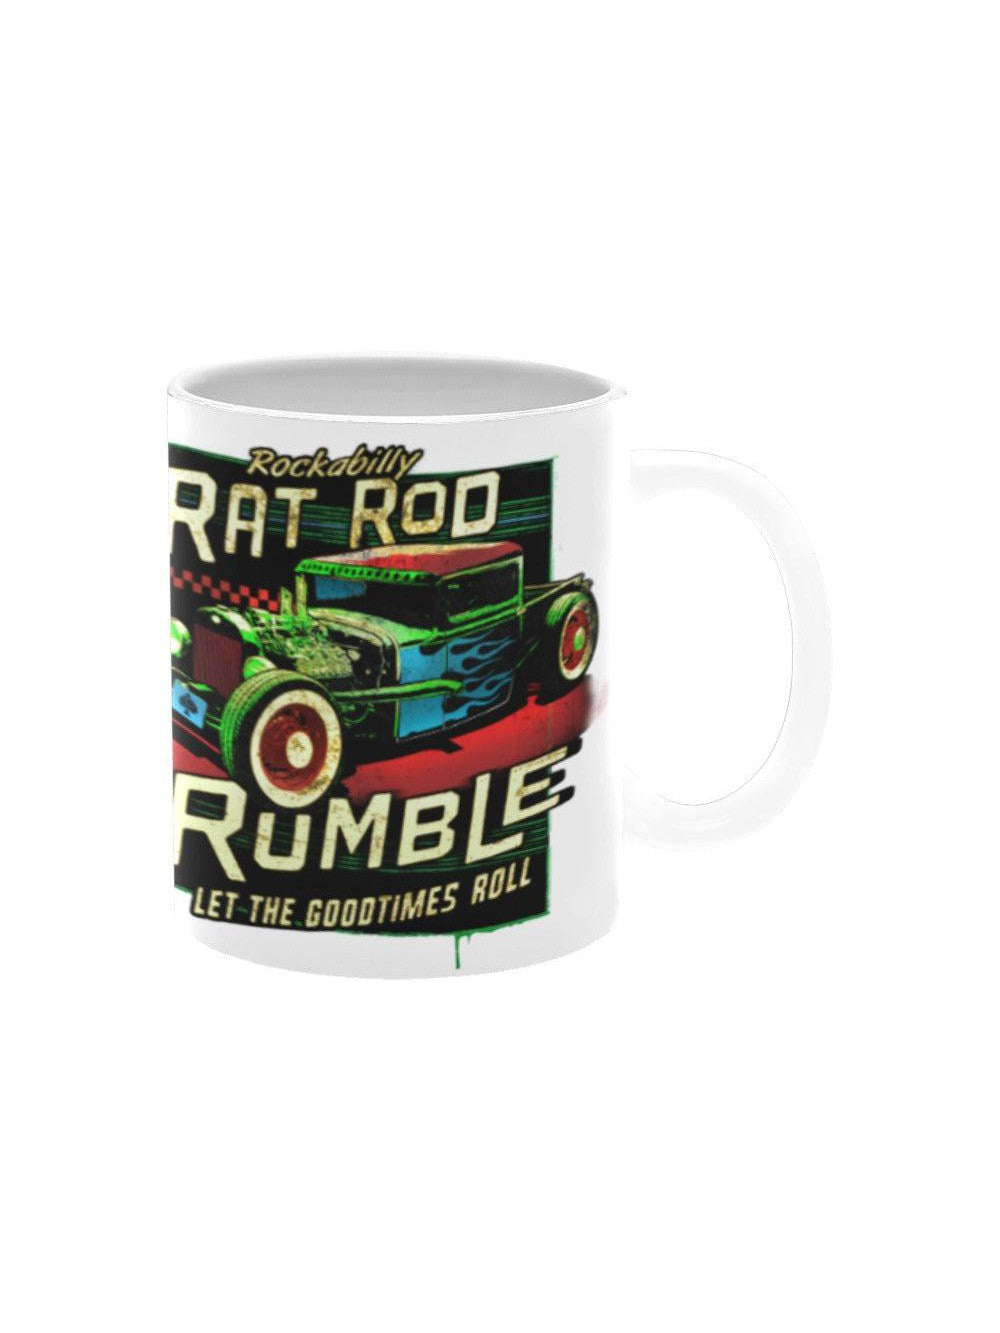 Rat Rod Rumble Mug